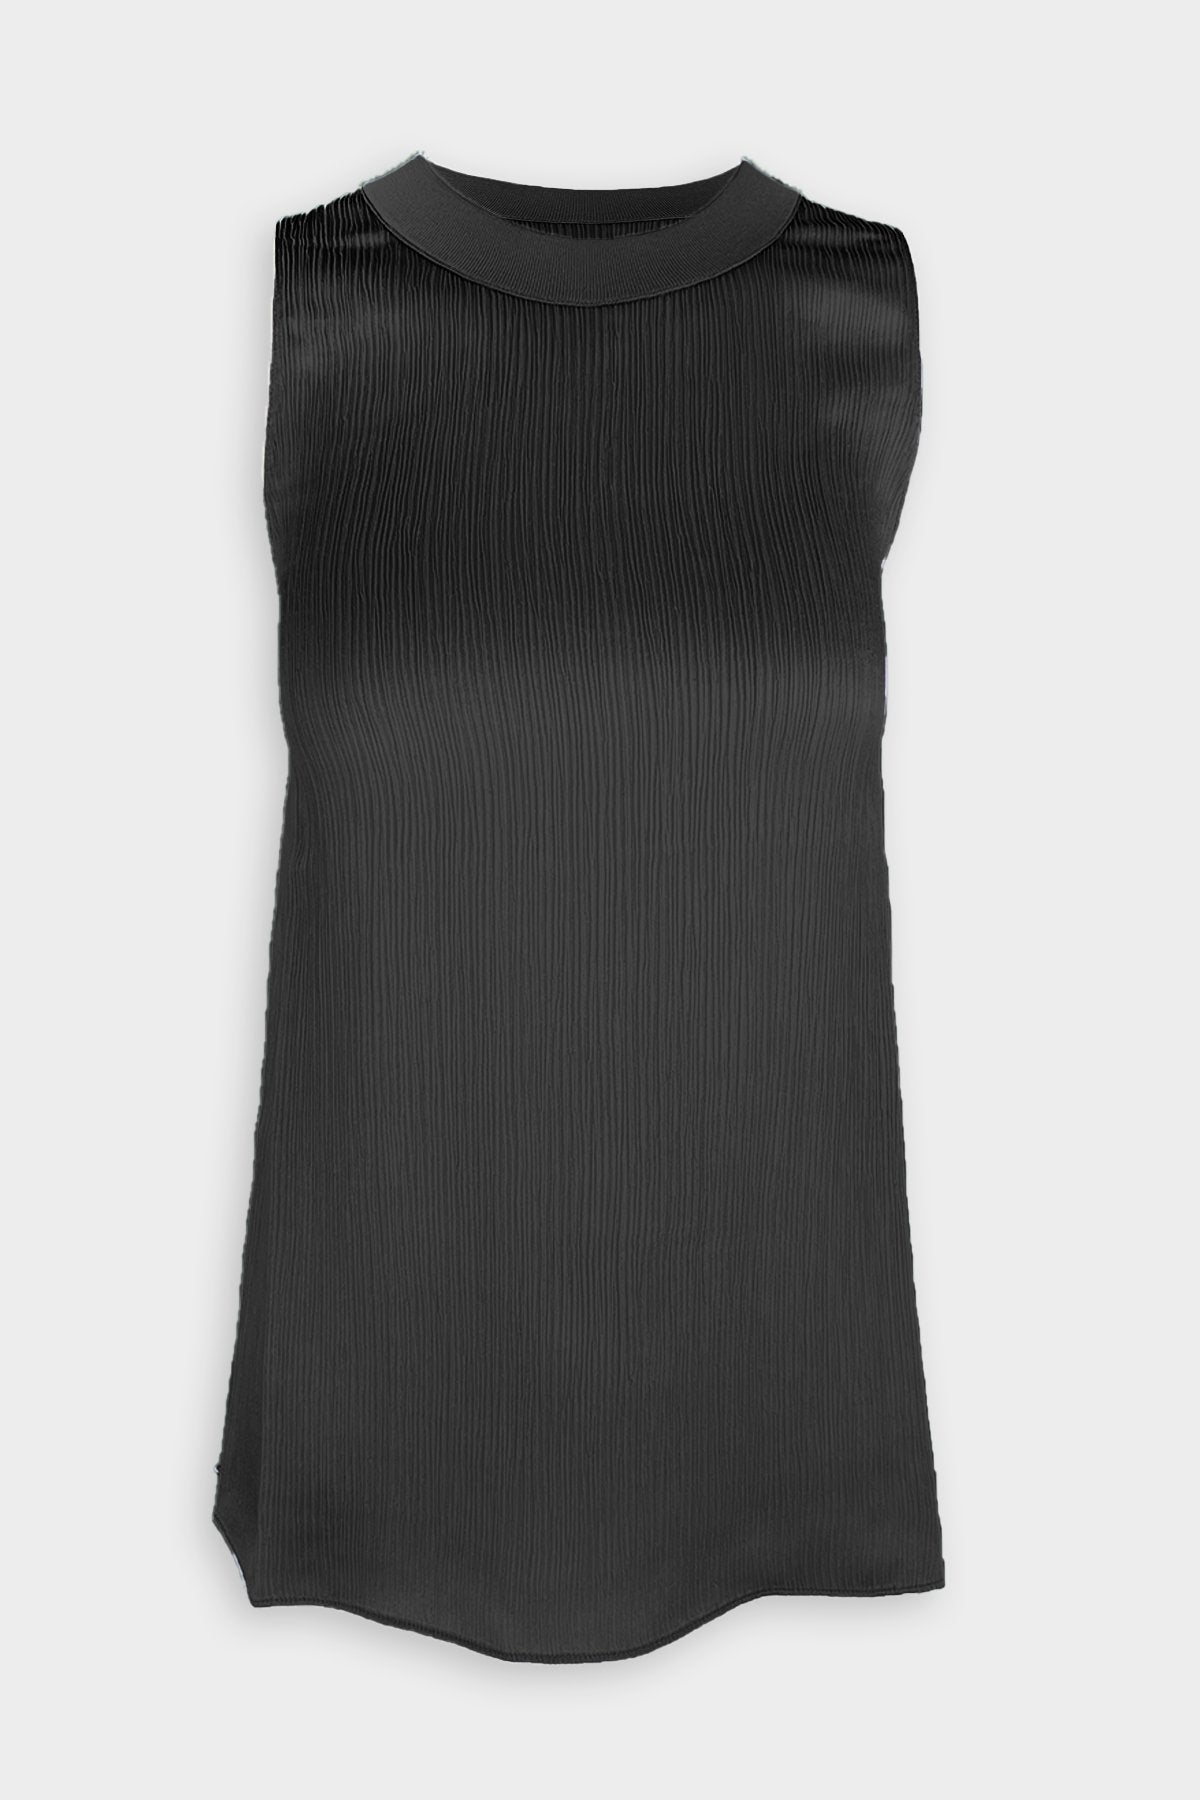 Rib Trim Tie Back Camisole in Black - shop-olivia.com